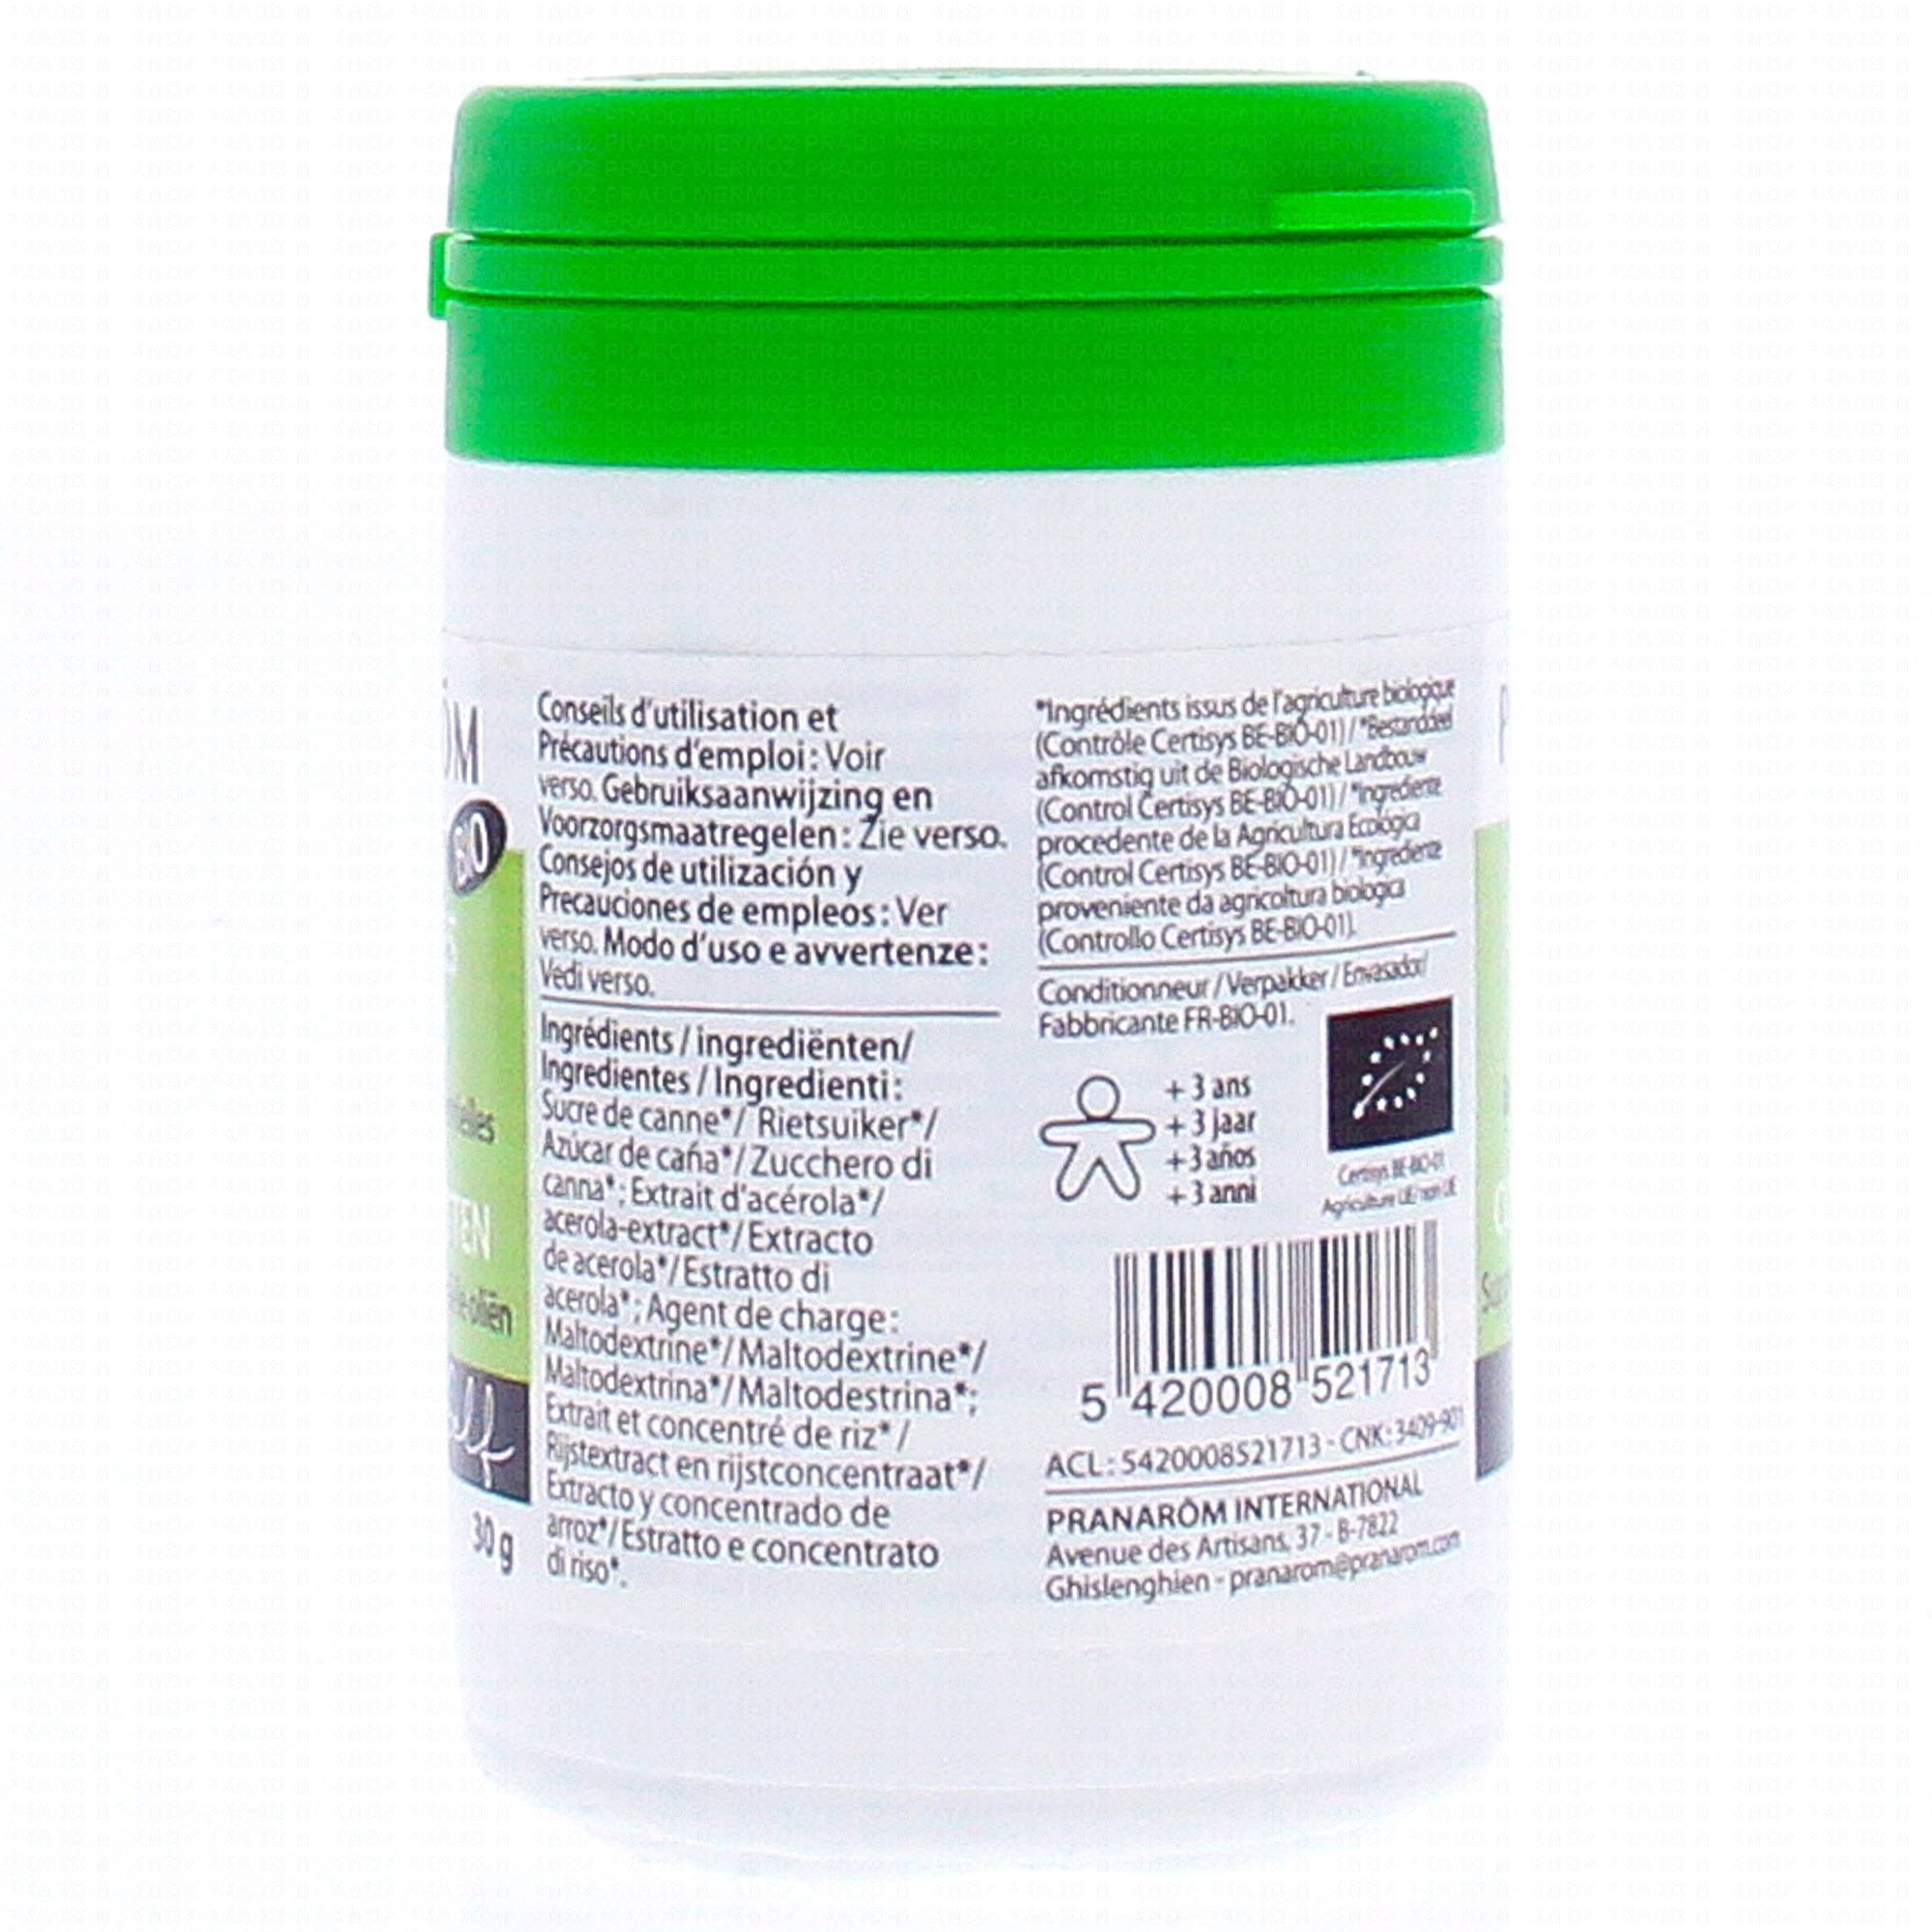 PRANAROM Aromaself - Comprimés neutre bio 30g - Pharmacie Prado Mermoz